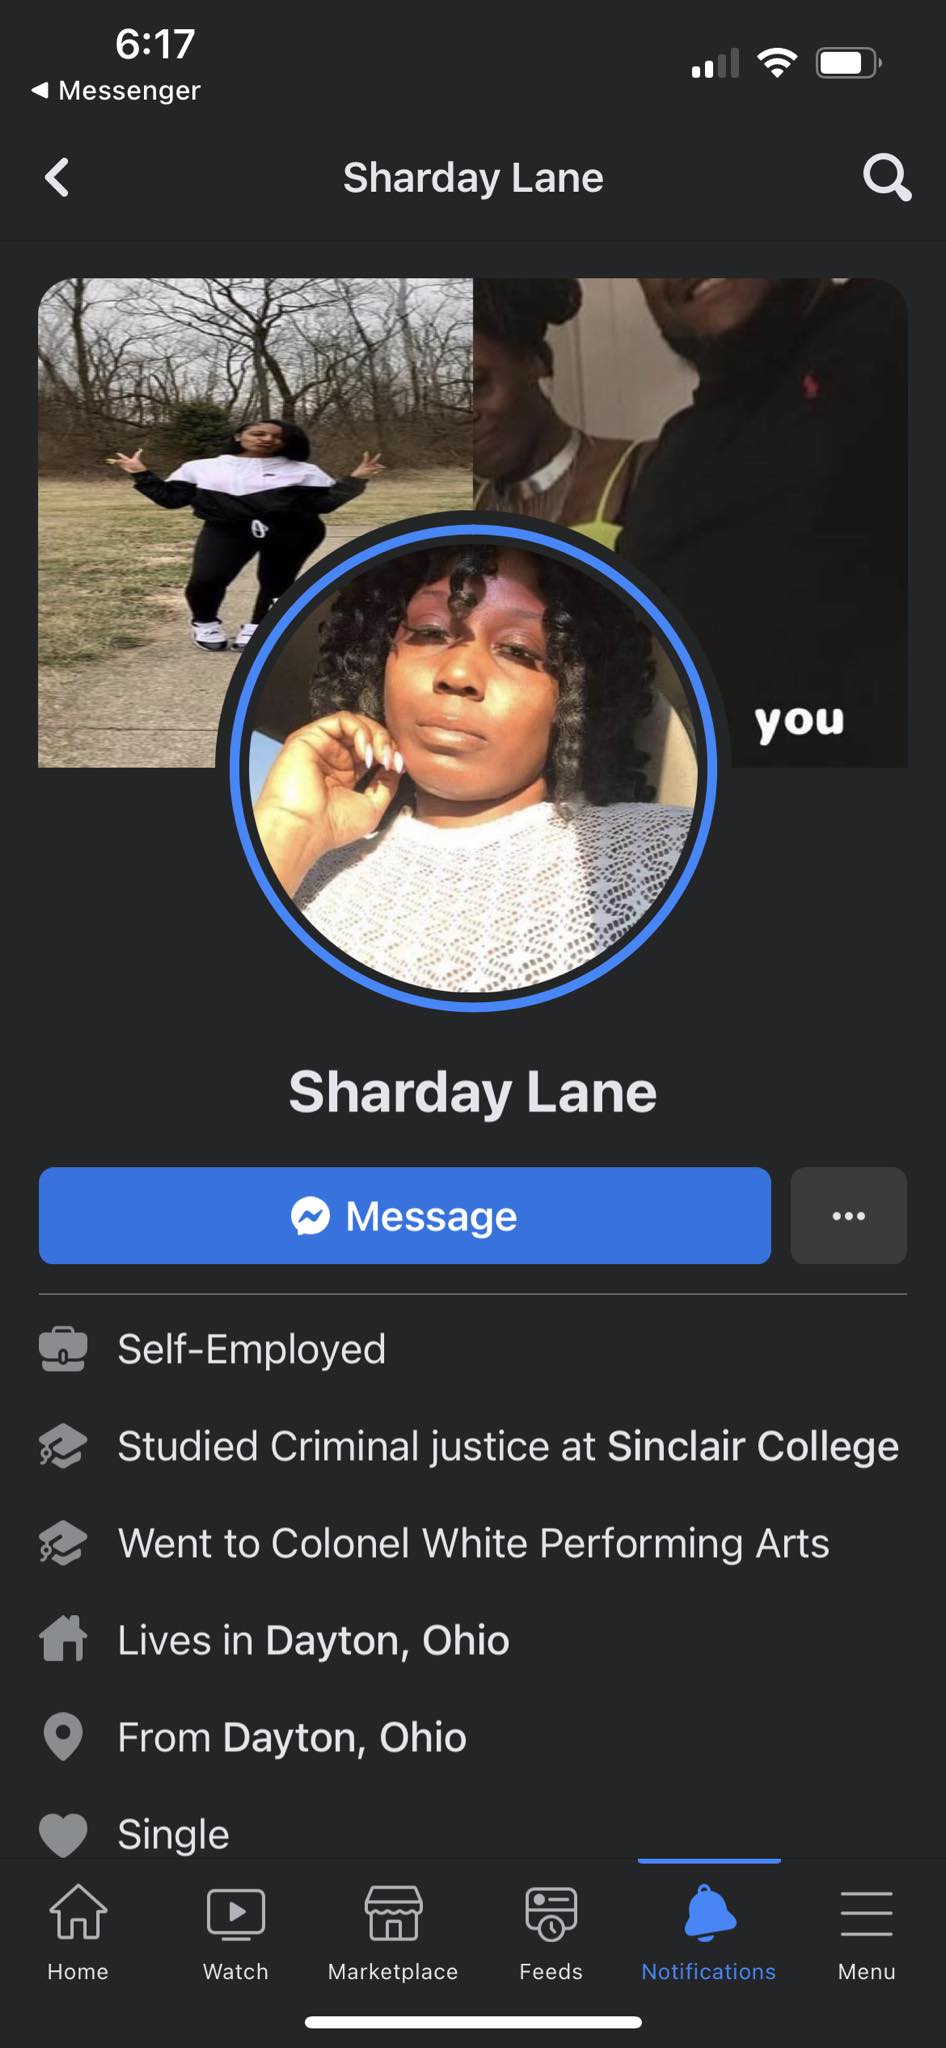 Sharday Lane, also known as Sharday V Lane